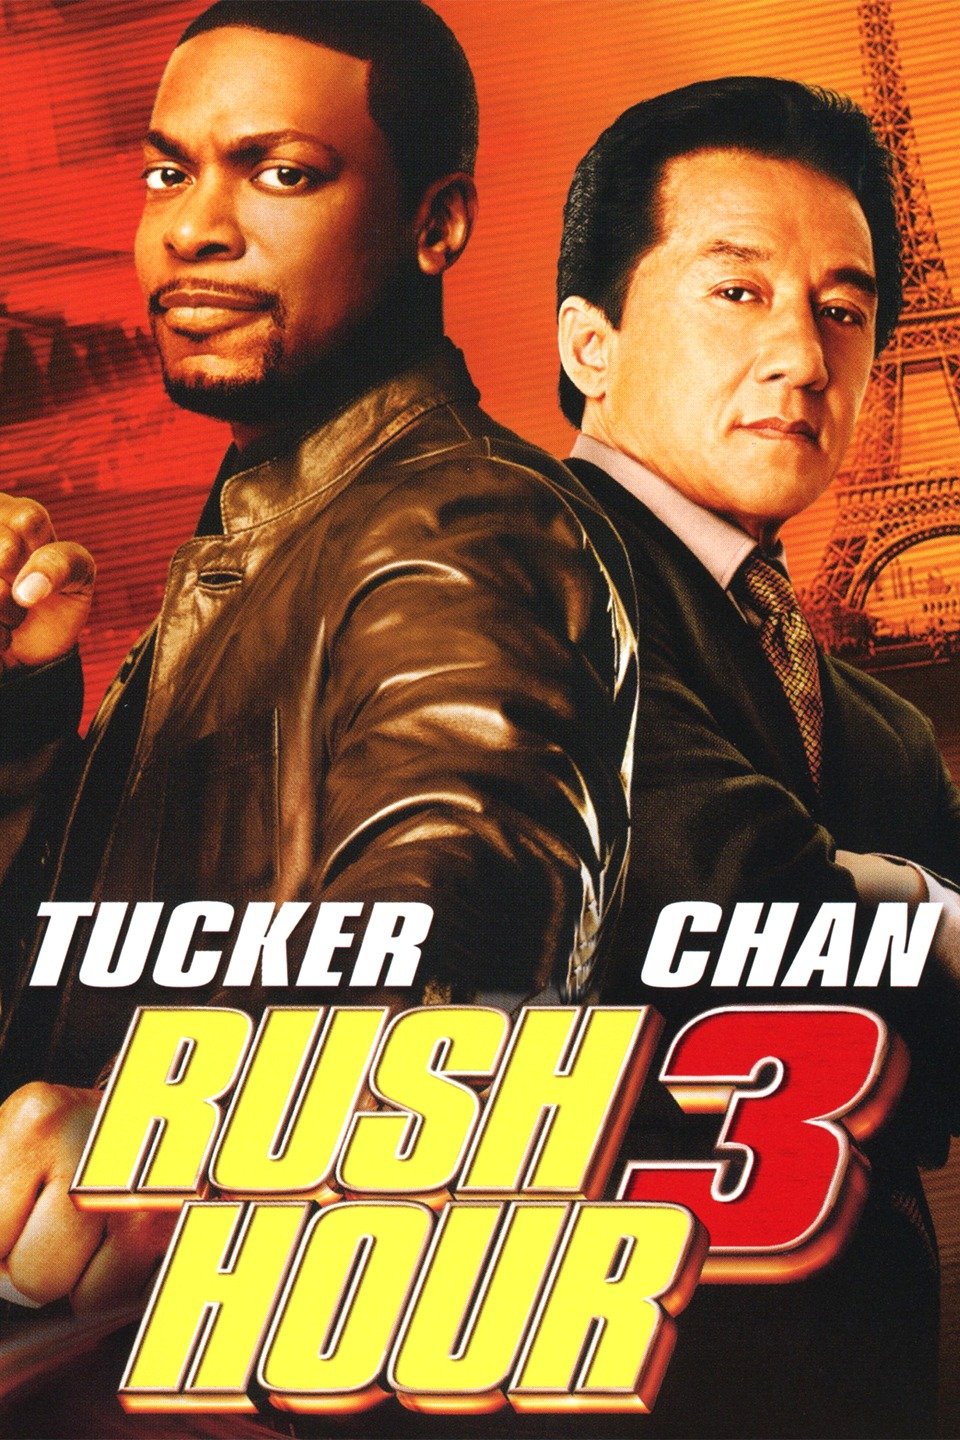 [MINI Super-HQ] Rush Hour 3 (2007) คู่ใหญ่ฟัดเต็มสปีด ภาค 3 [1080p] [พากย์ไทย 5.1 + อังกฤษ DTS] [บรรยายไทย + อังกฤษ] [เสียงไทย + ซับไทย] [ONE2UP]